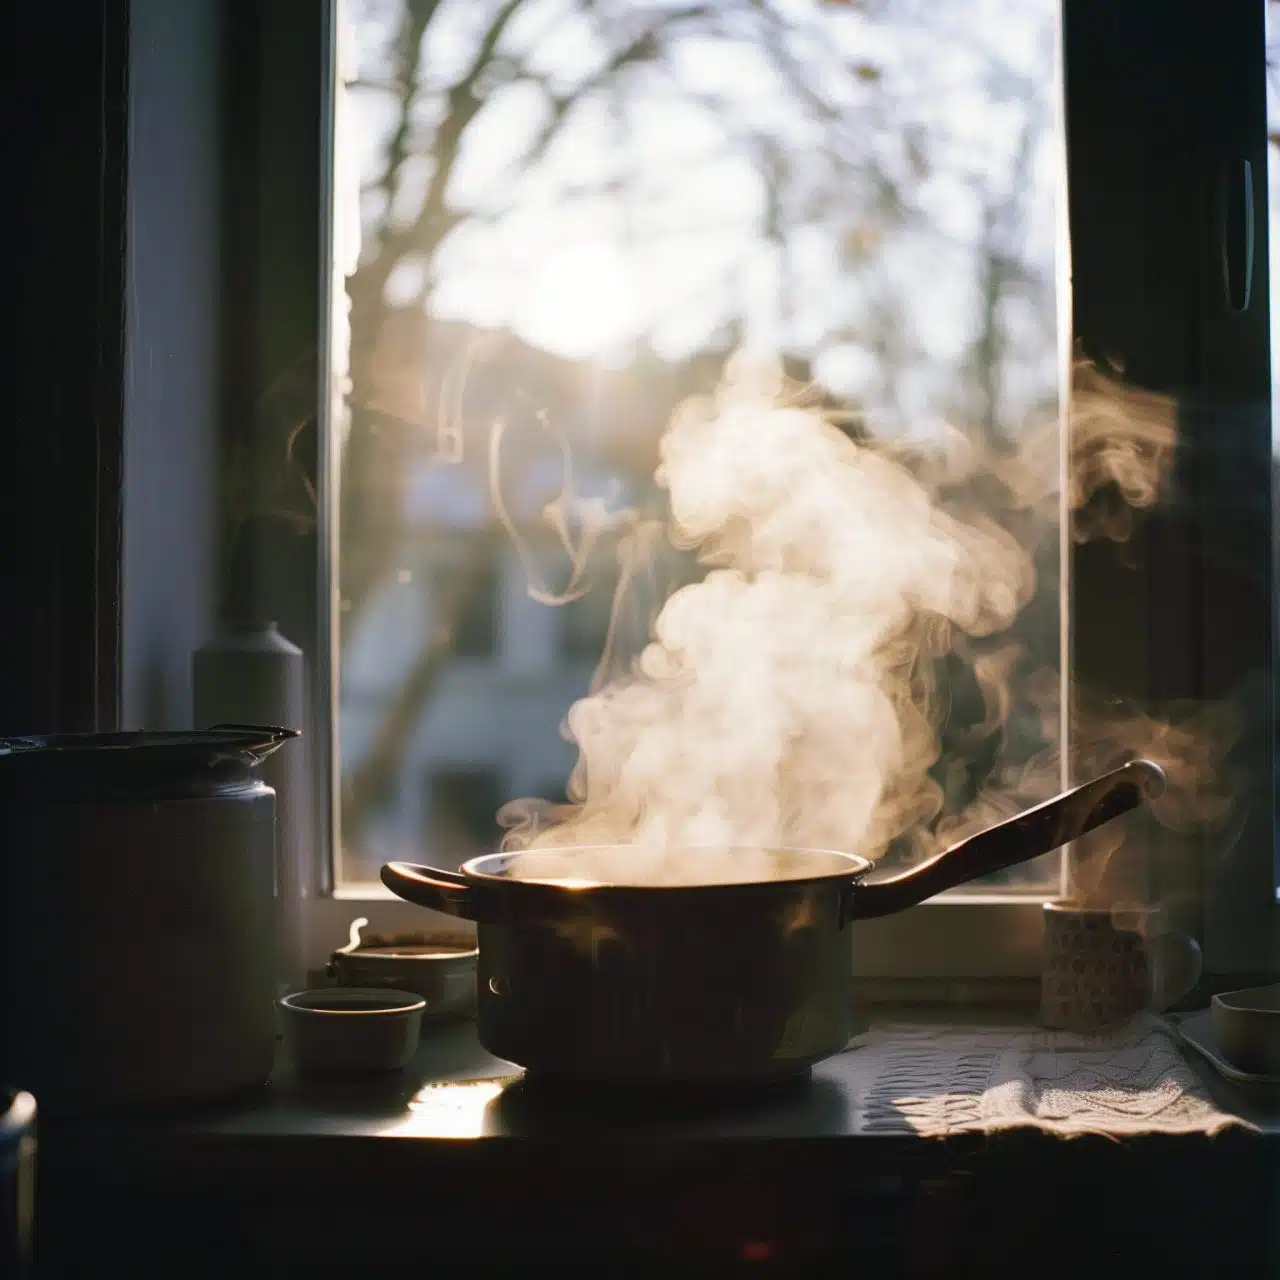 Boiling pot, steam fogging windows